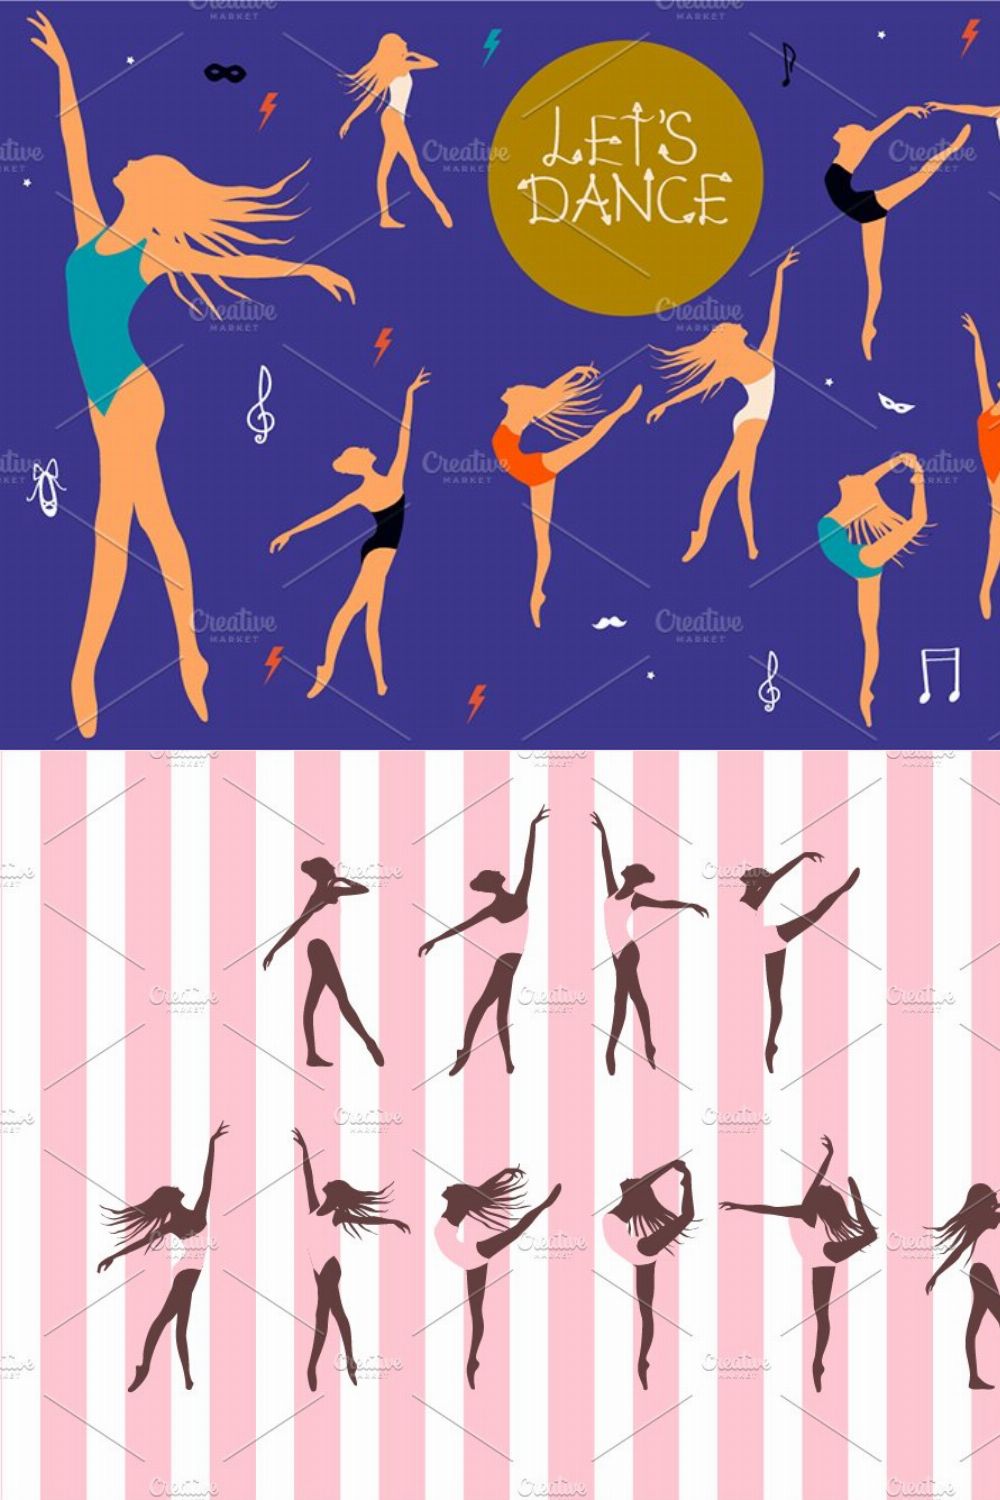 Let's Dance Illustration Kit pinterest preview image.